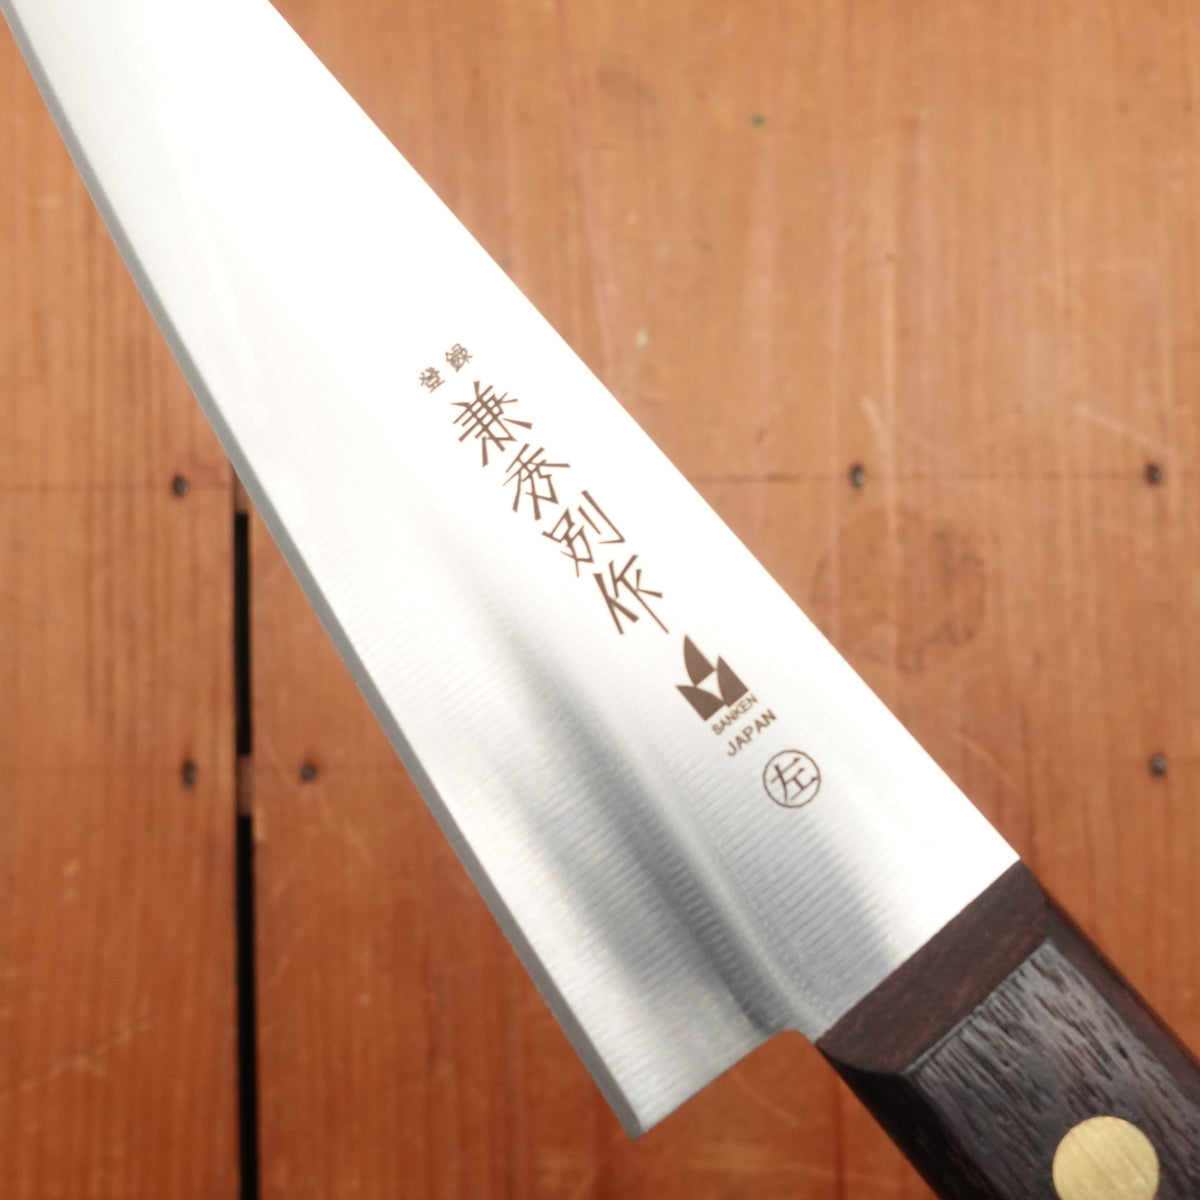 Kanehide 150mm Honesuki Kaku Semi-Stainless Japanese Butcher Knife - LEFTY